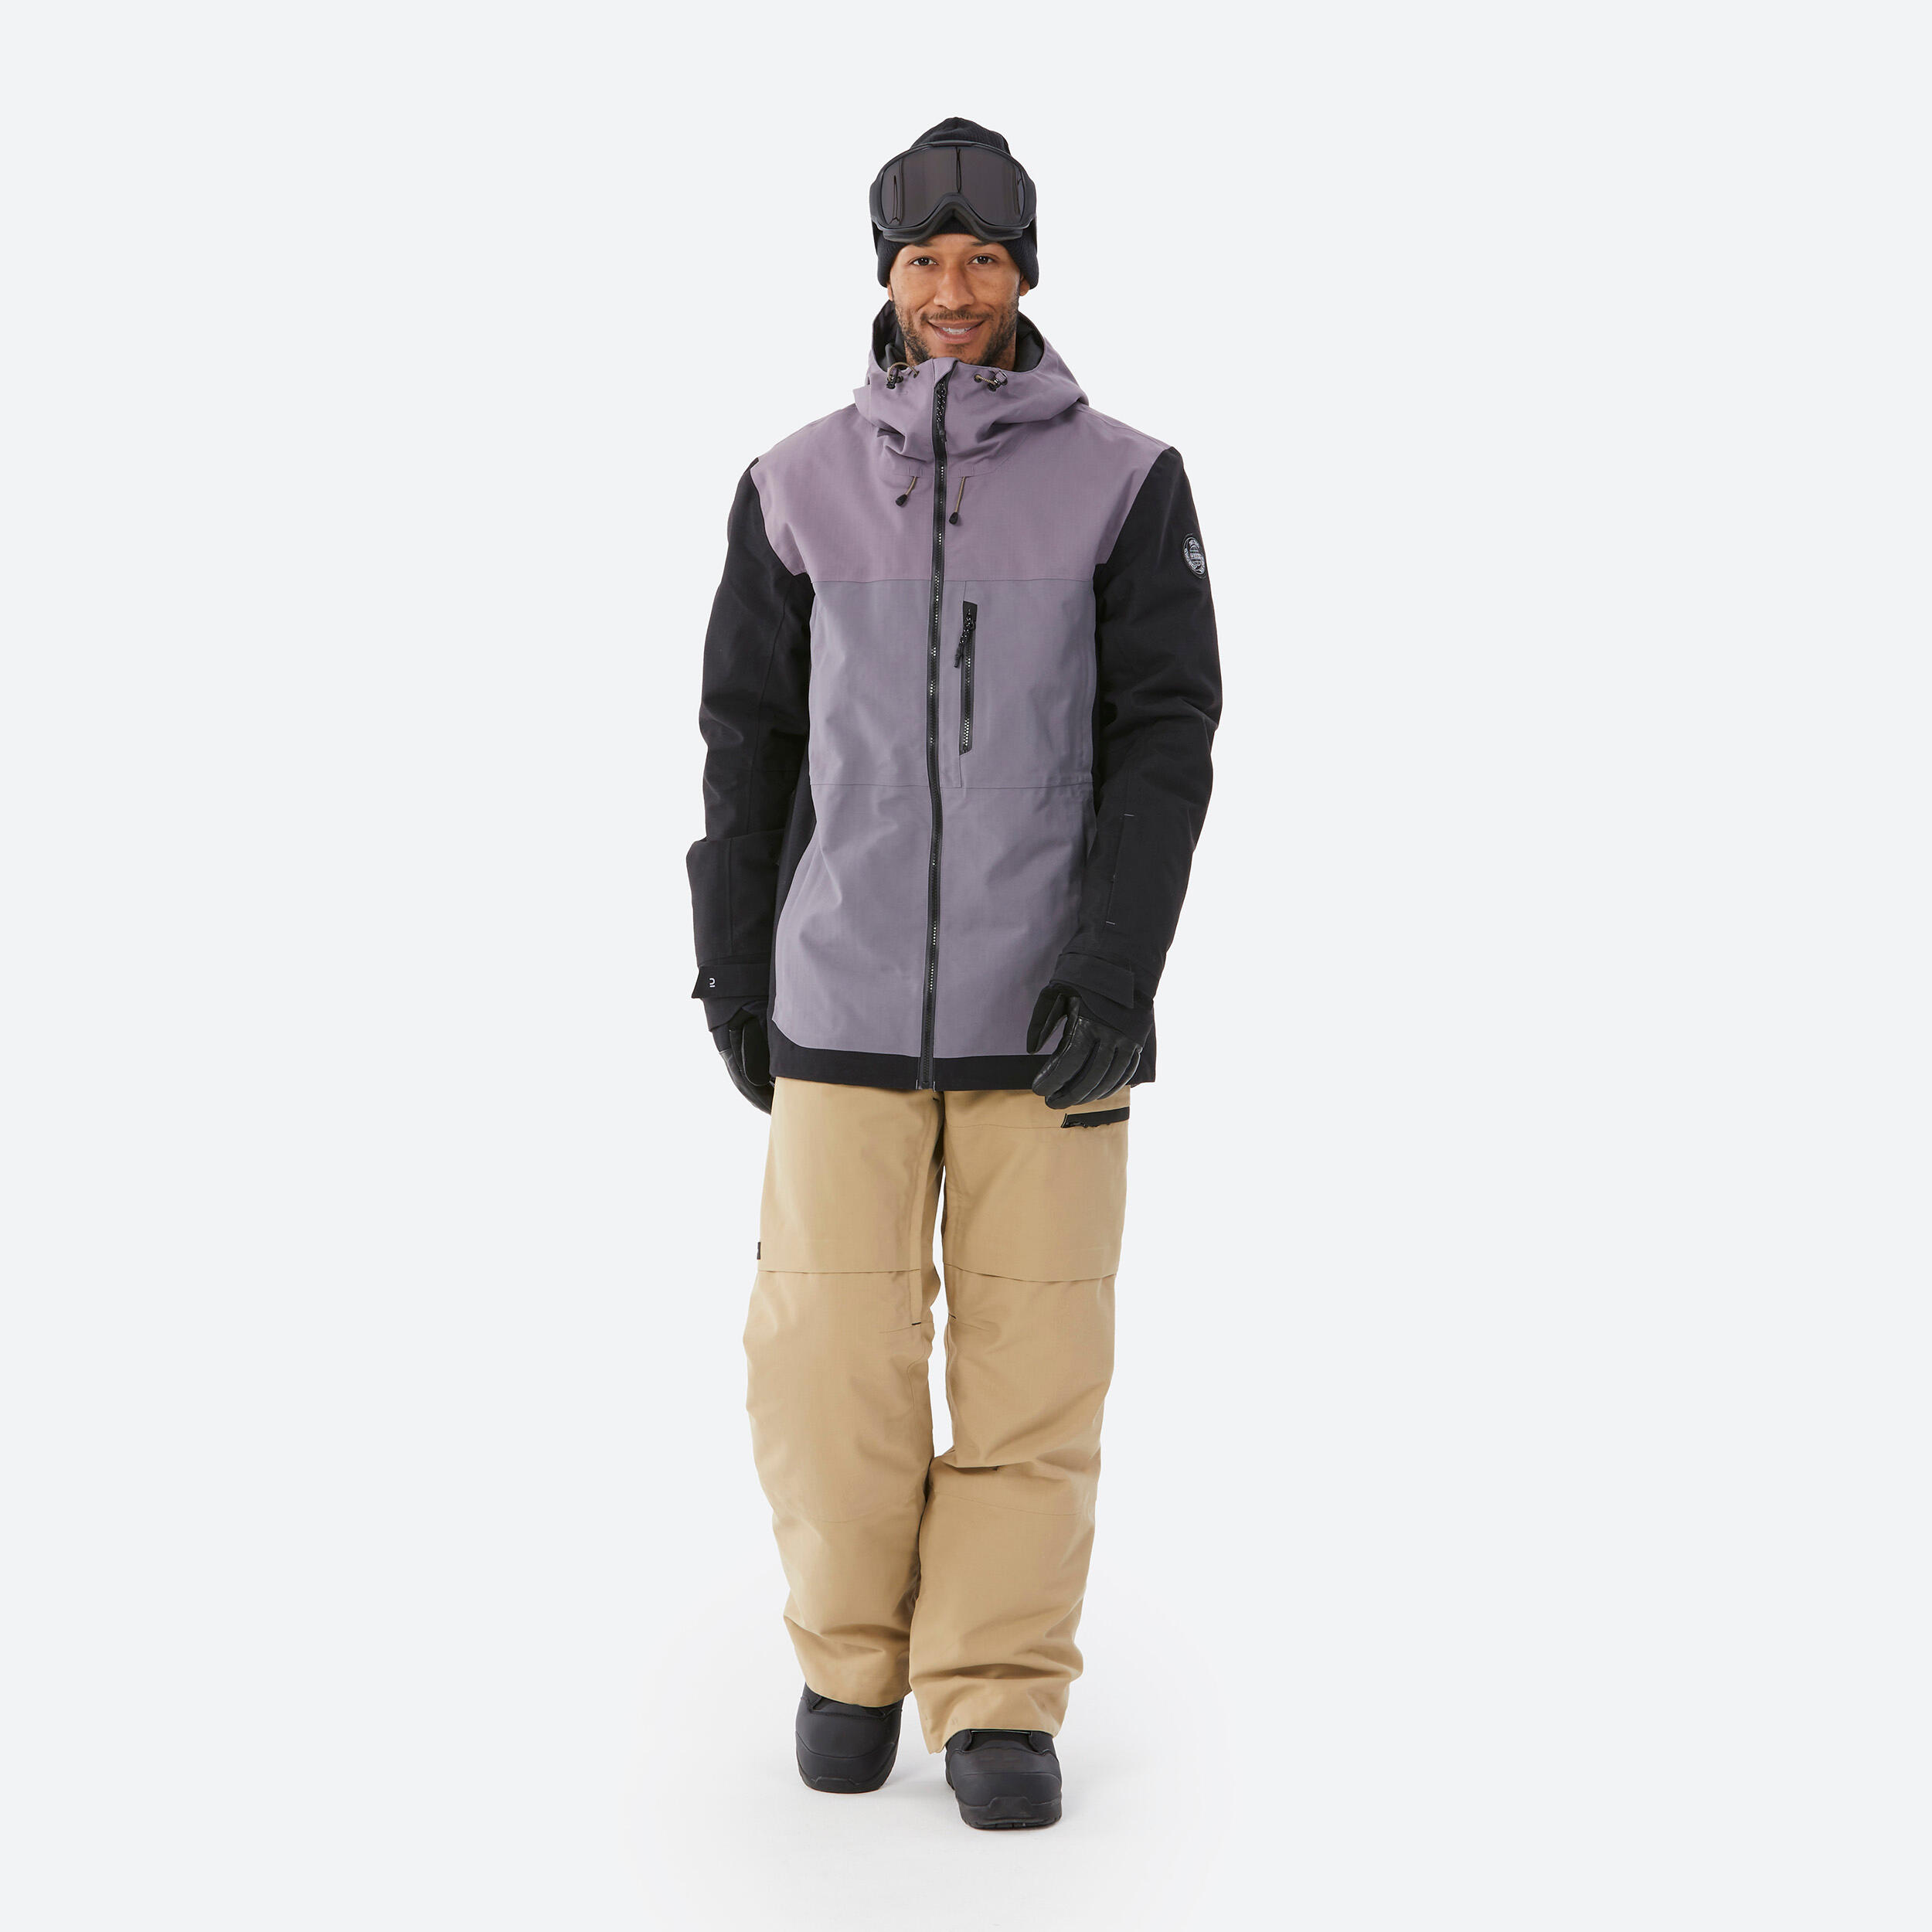 Men's snowboard jacket compatible with ZIPROTEC - SNB 500 - Purple 4/17